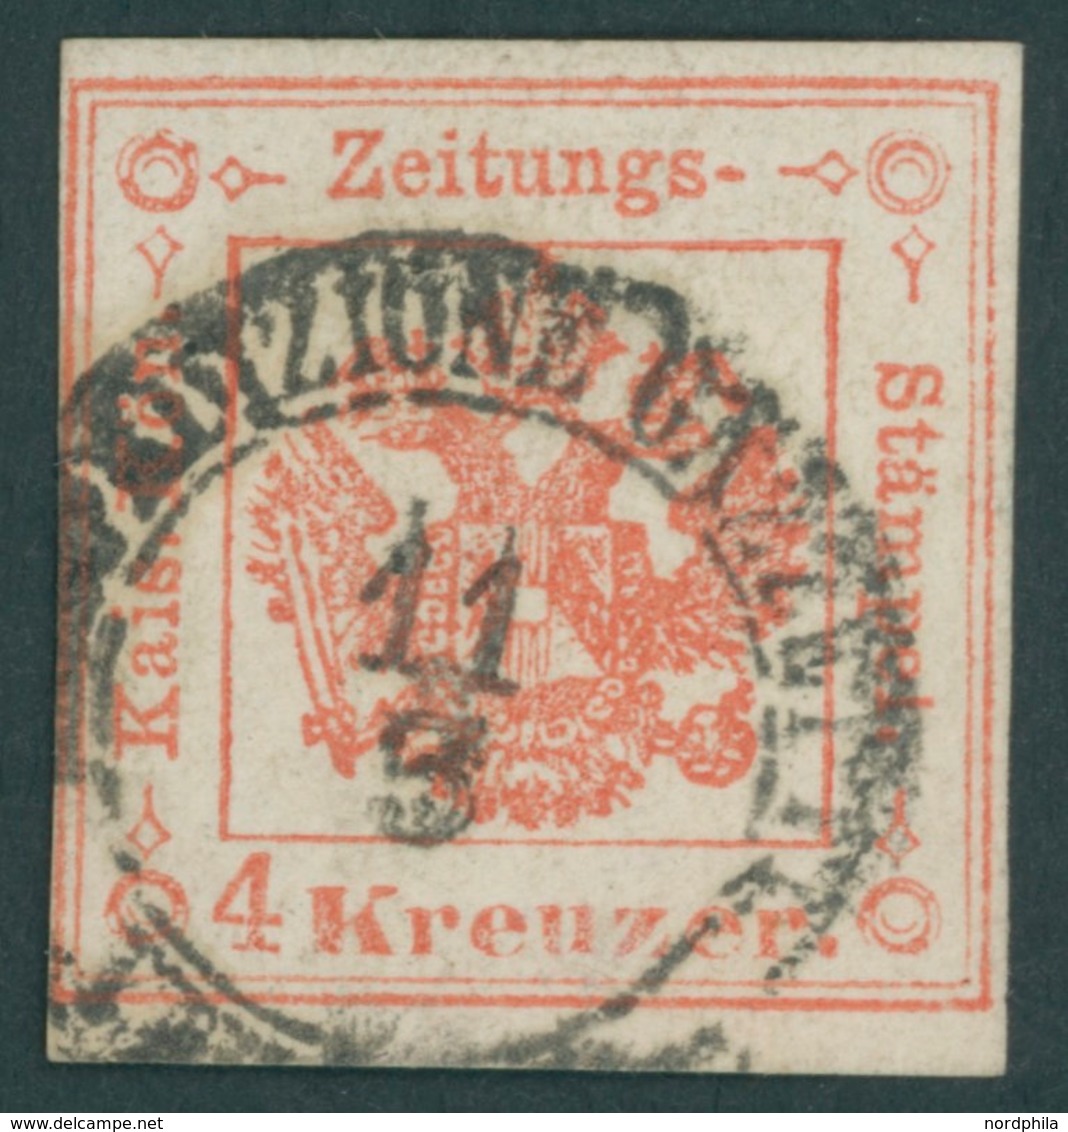 LOMBARDEI UND VENETIEN Z 3 O, Zeitungsstempelmarken: 1858, 4 Kr. Rot, Links Lupenrandig, Sonst Breitrandiges Farbfrische - Lombardije-Venetië